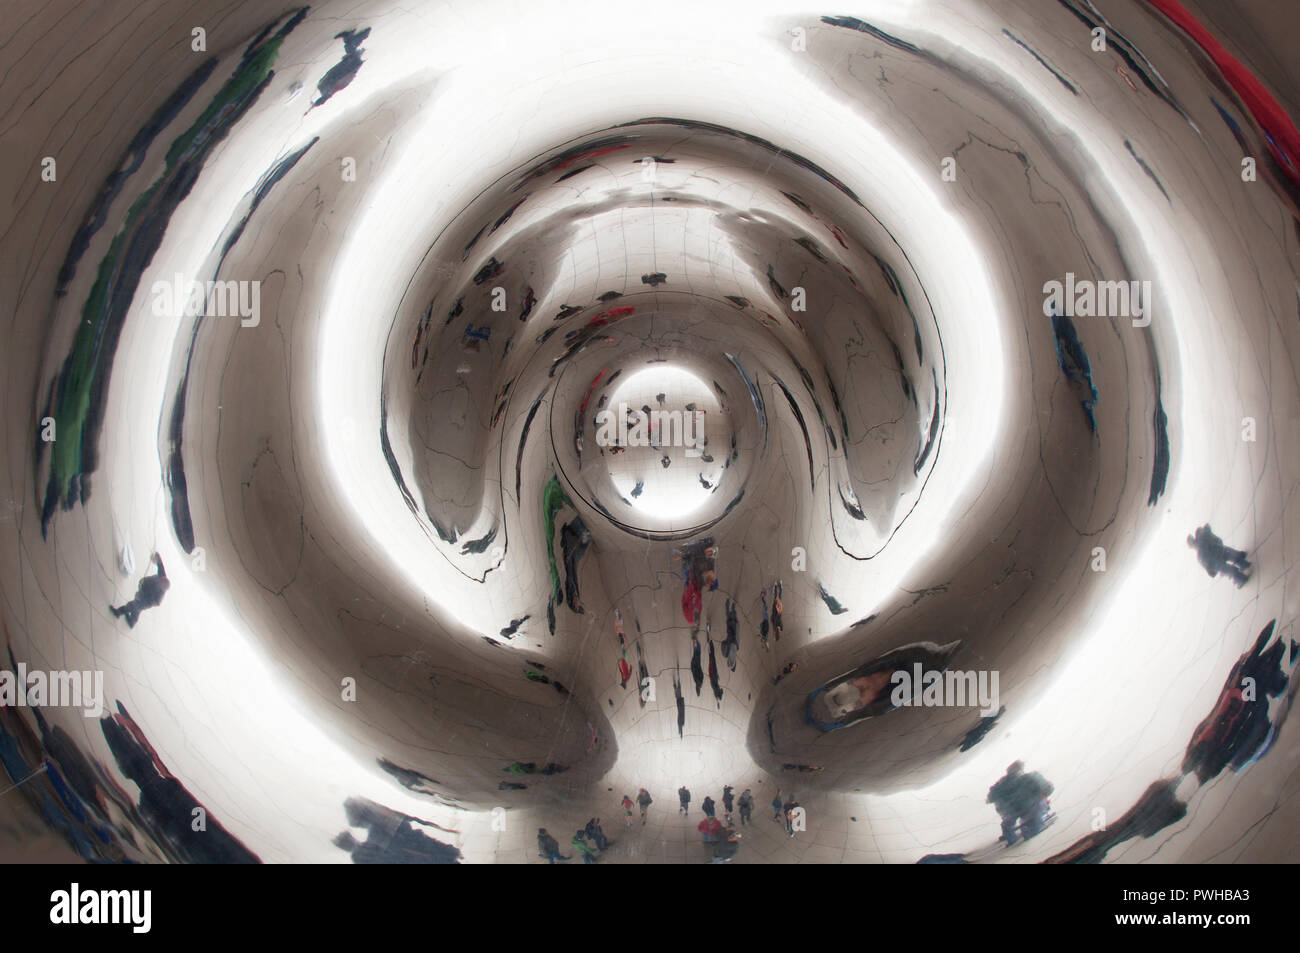 Reflection inside Chicago's bean (Cloud Gate) at Millennium Park Stock Photo